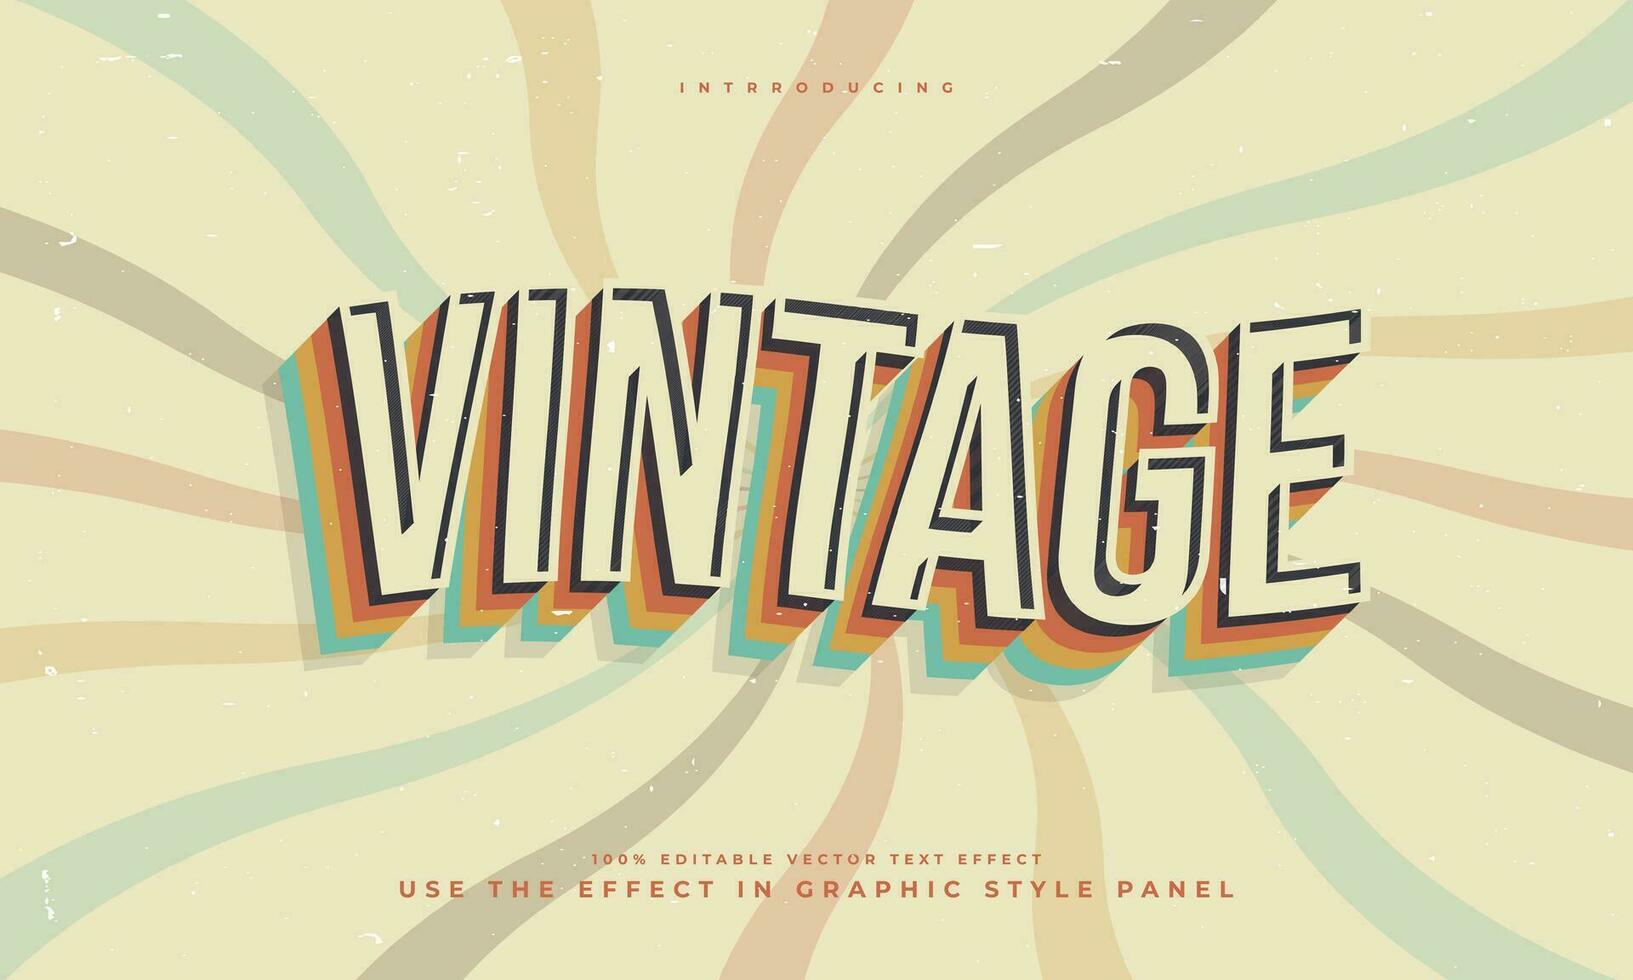 Clásico retro grunge textura letras estilo editable vistoso arco iris vector texto efecto alfabeto fuente tipografía